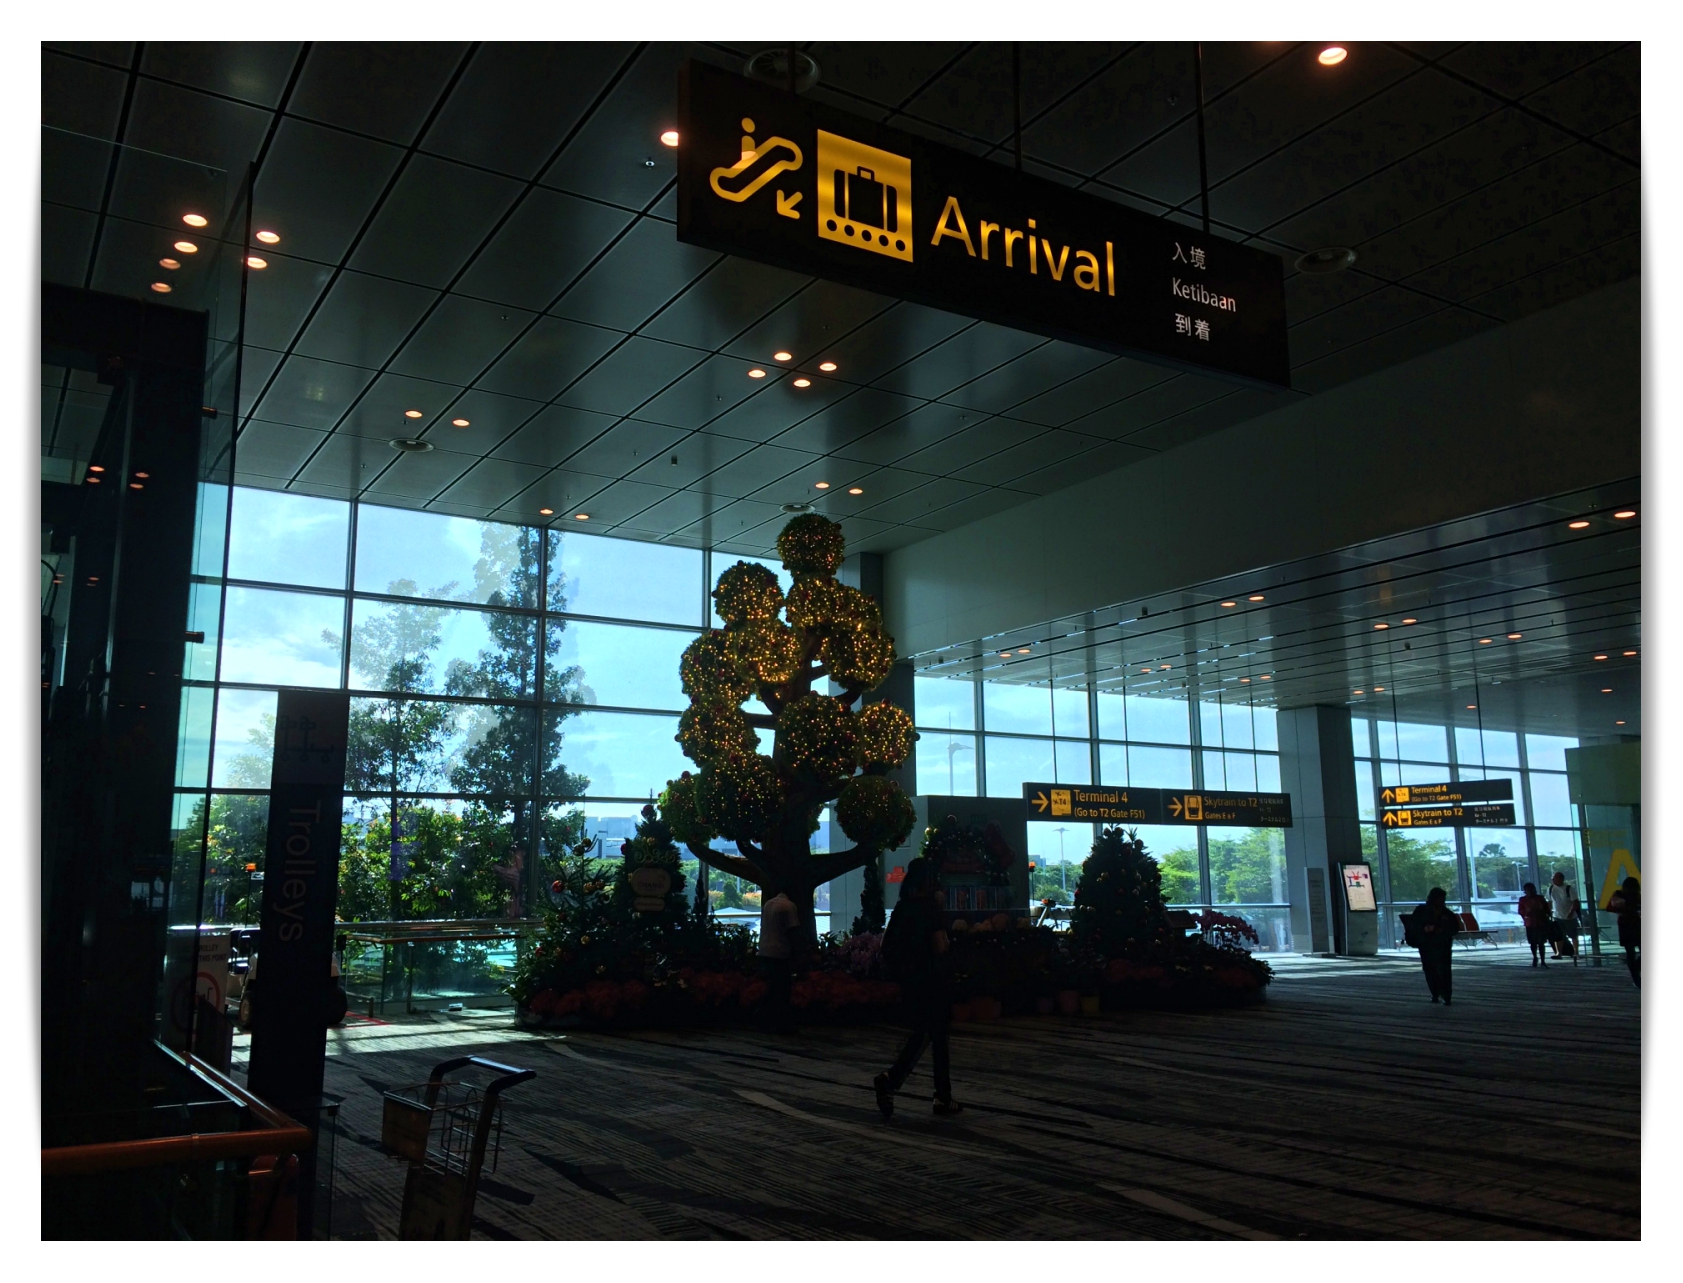 Changi International Airport: My First Visit